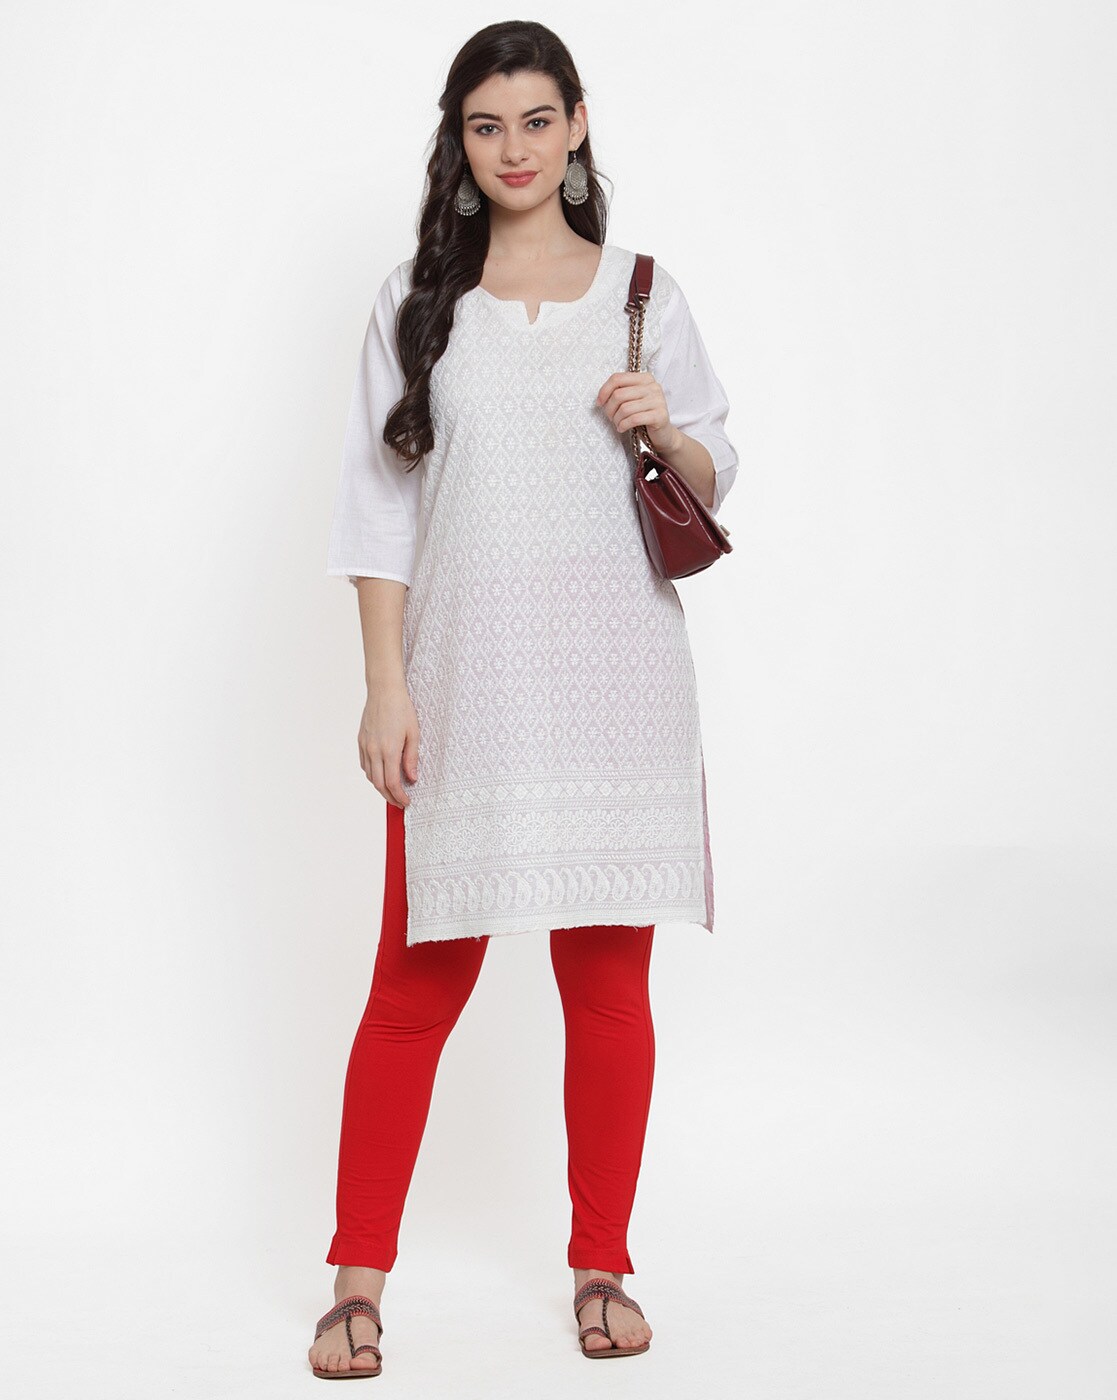 How Do You Match The Red Top? - Trade News - News - Dongguan Lancai Garment  Co.,Ltd.